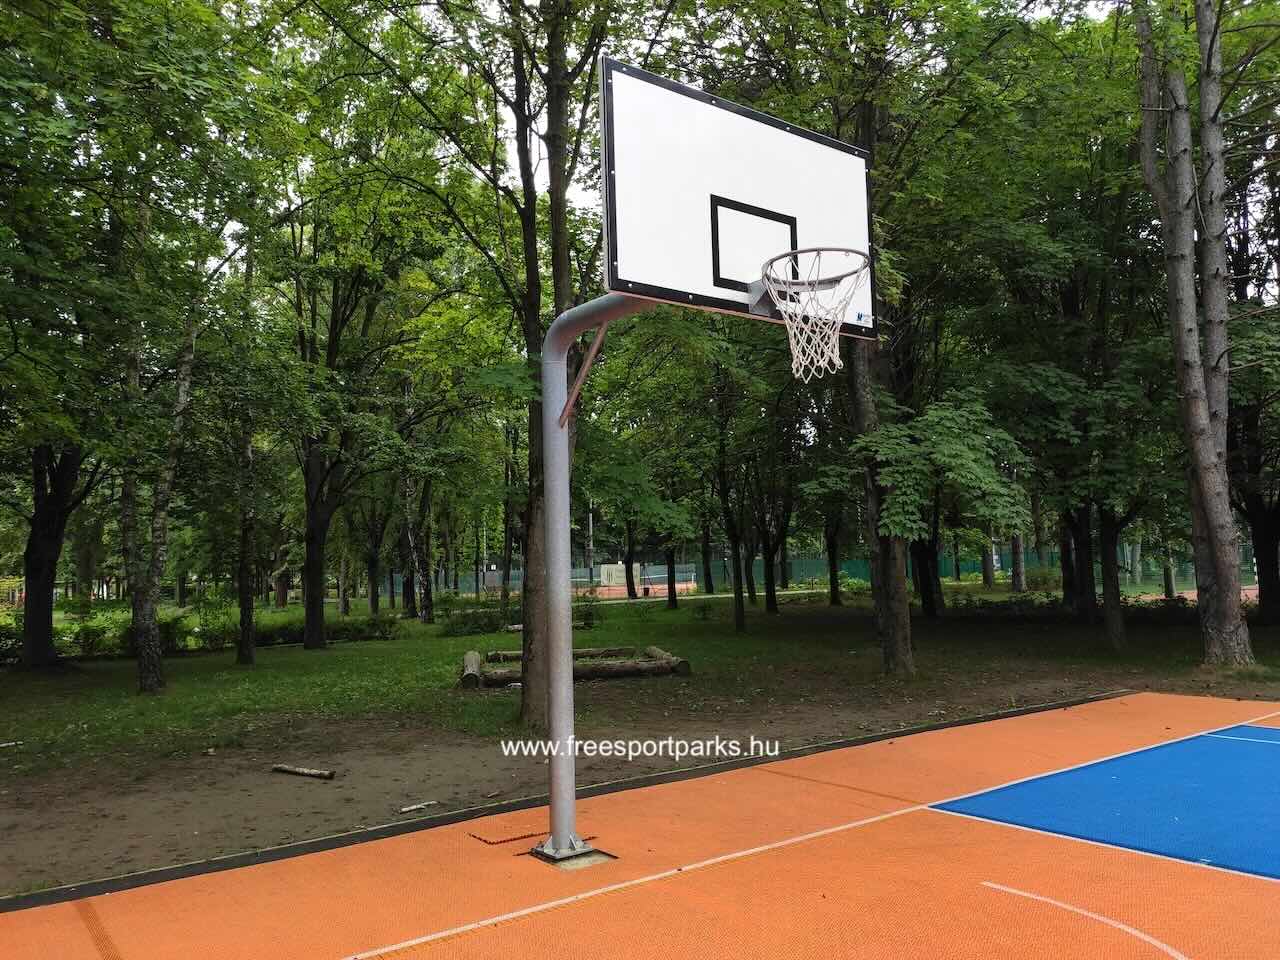 Kosárlabda palánk, Szombathely Sportliget - Free Sport Parks Blog